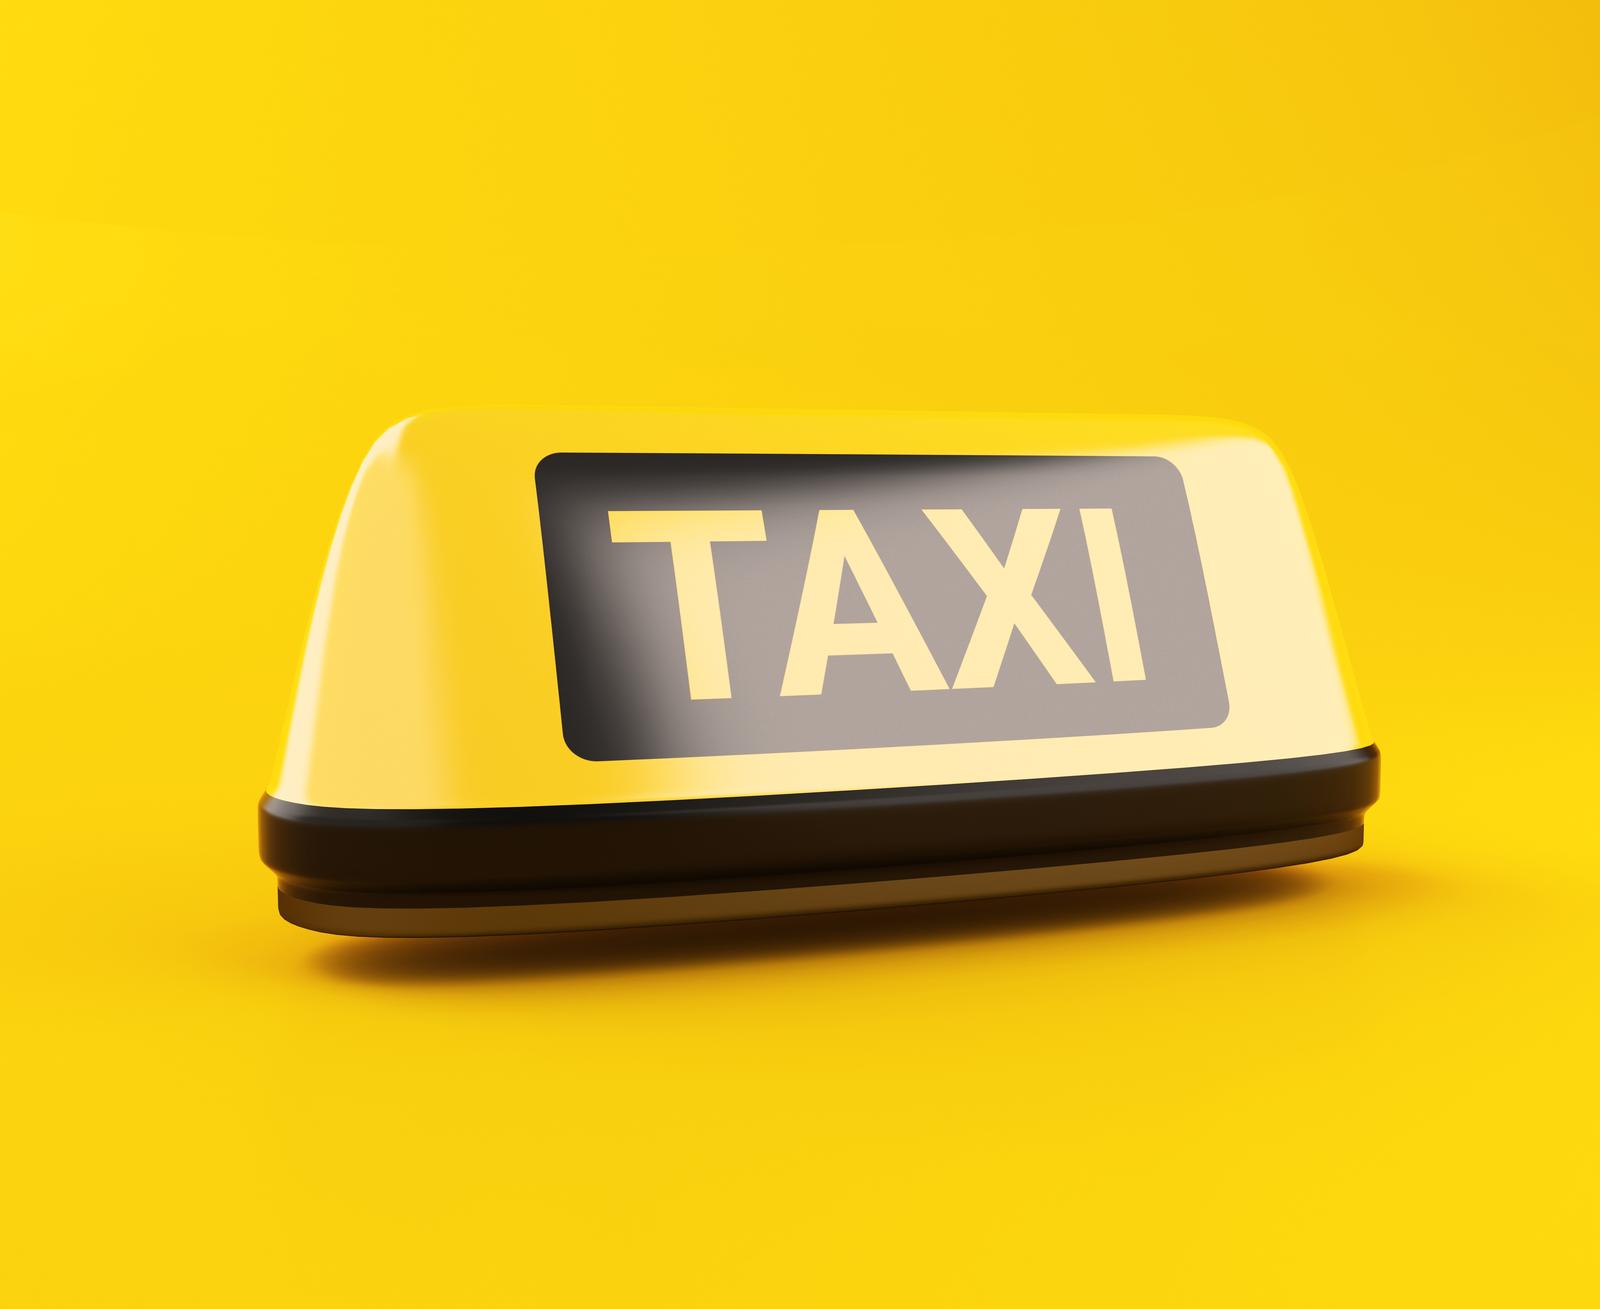 Taxi operation in Tartu